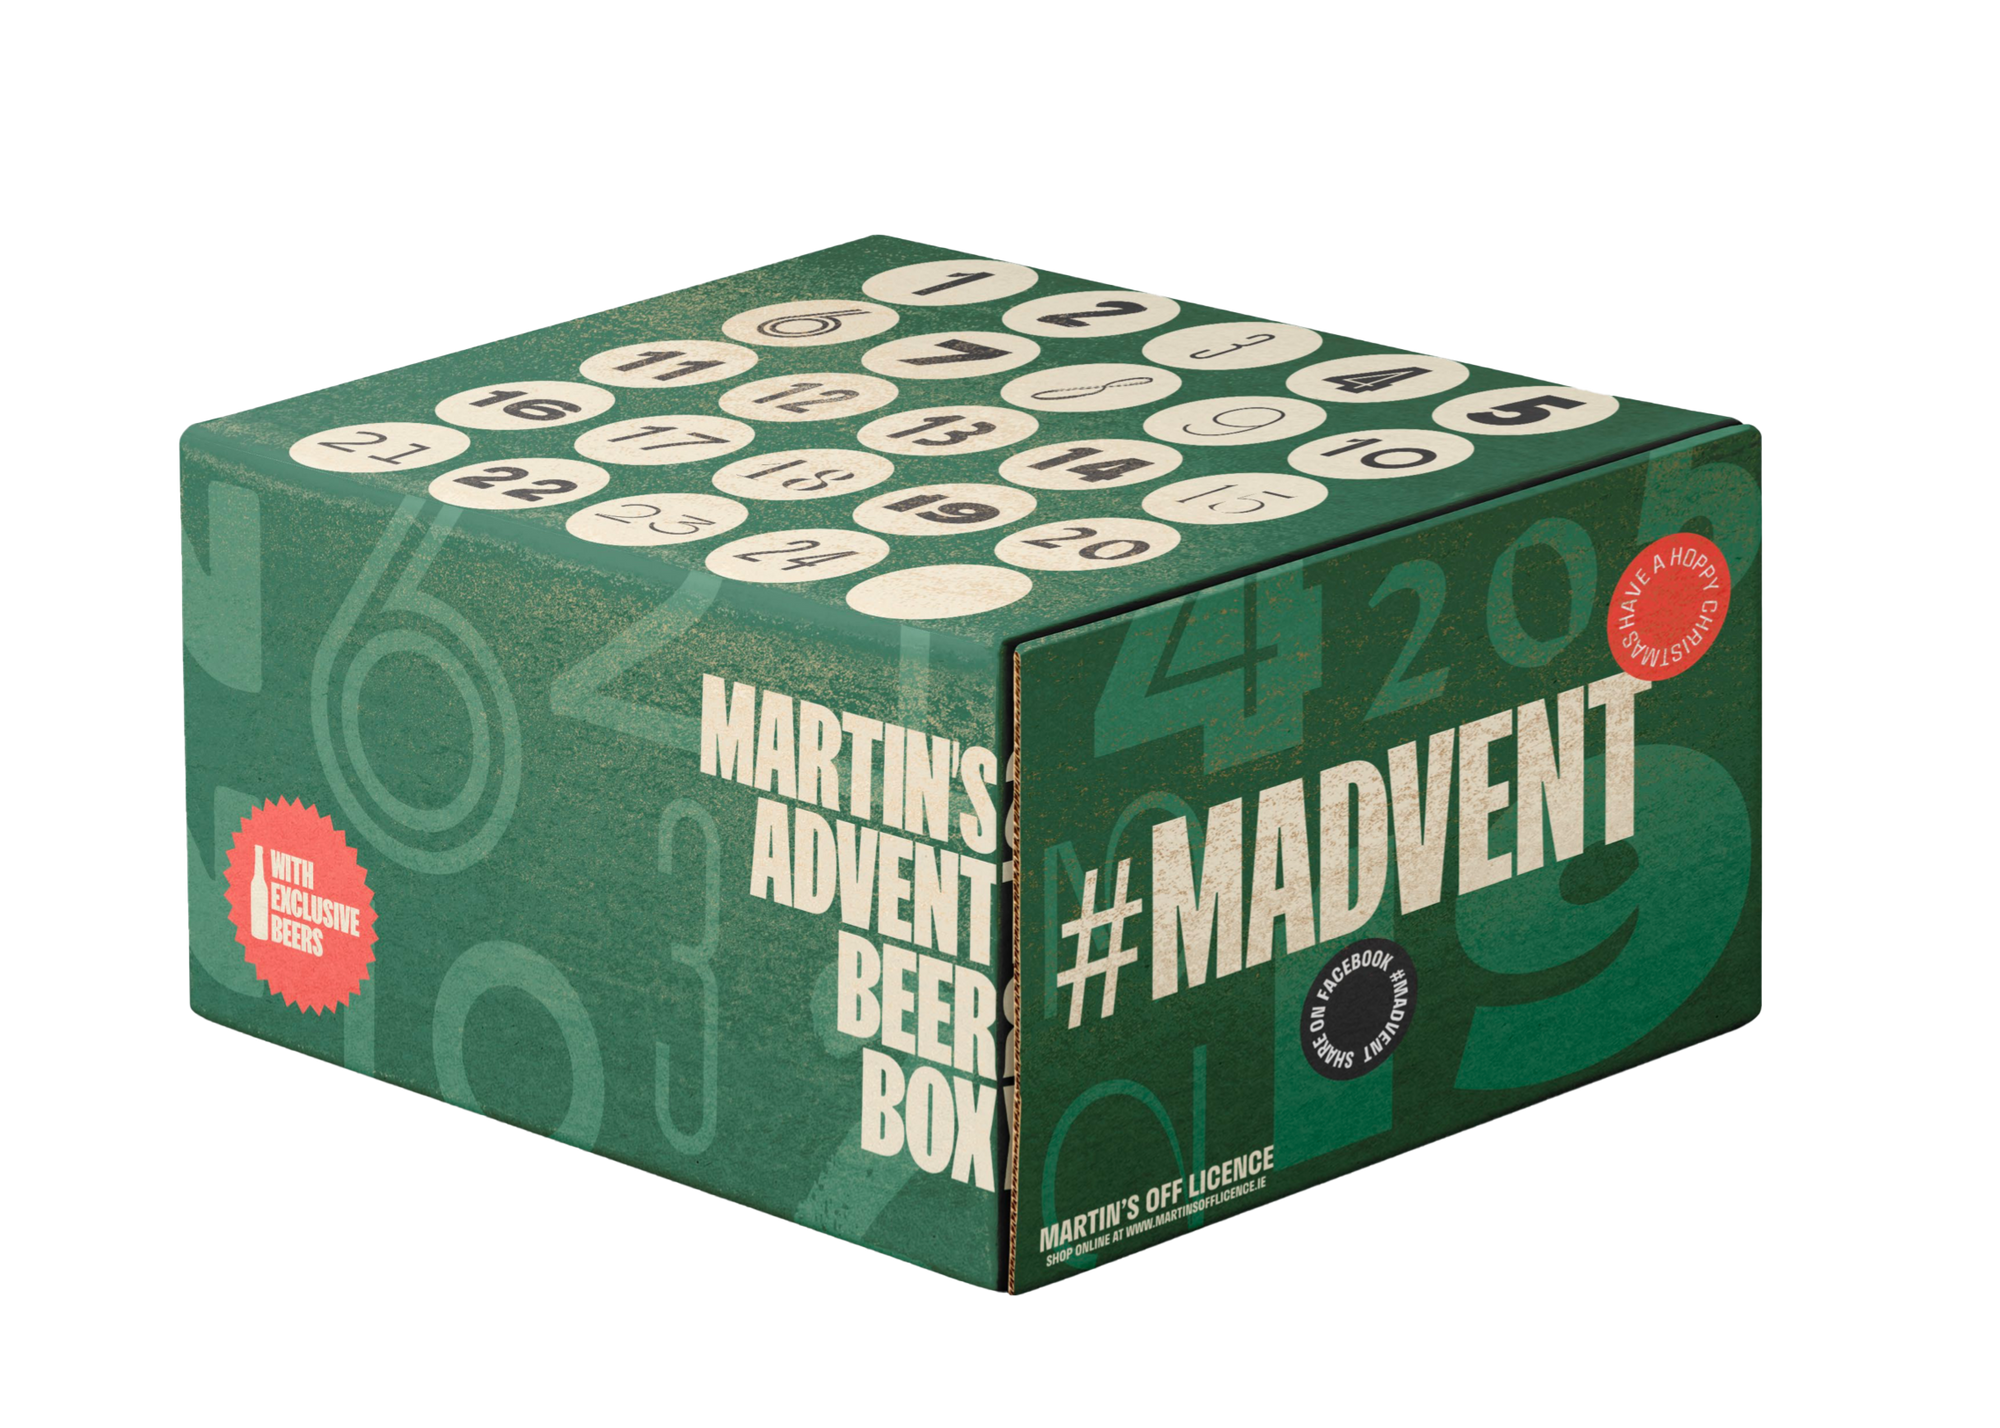 Martins Advent Craft Beer Box 2023 #MADVENT